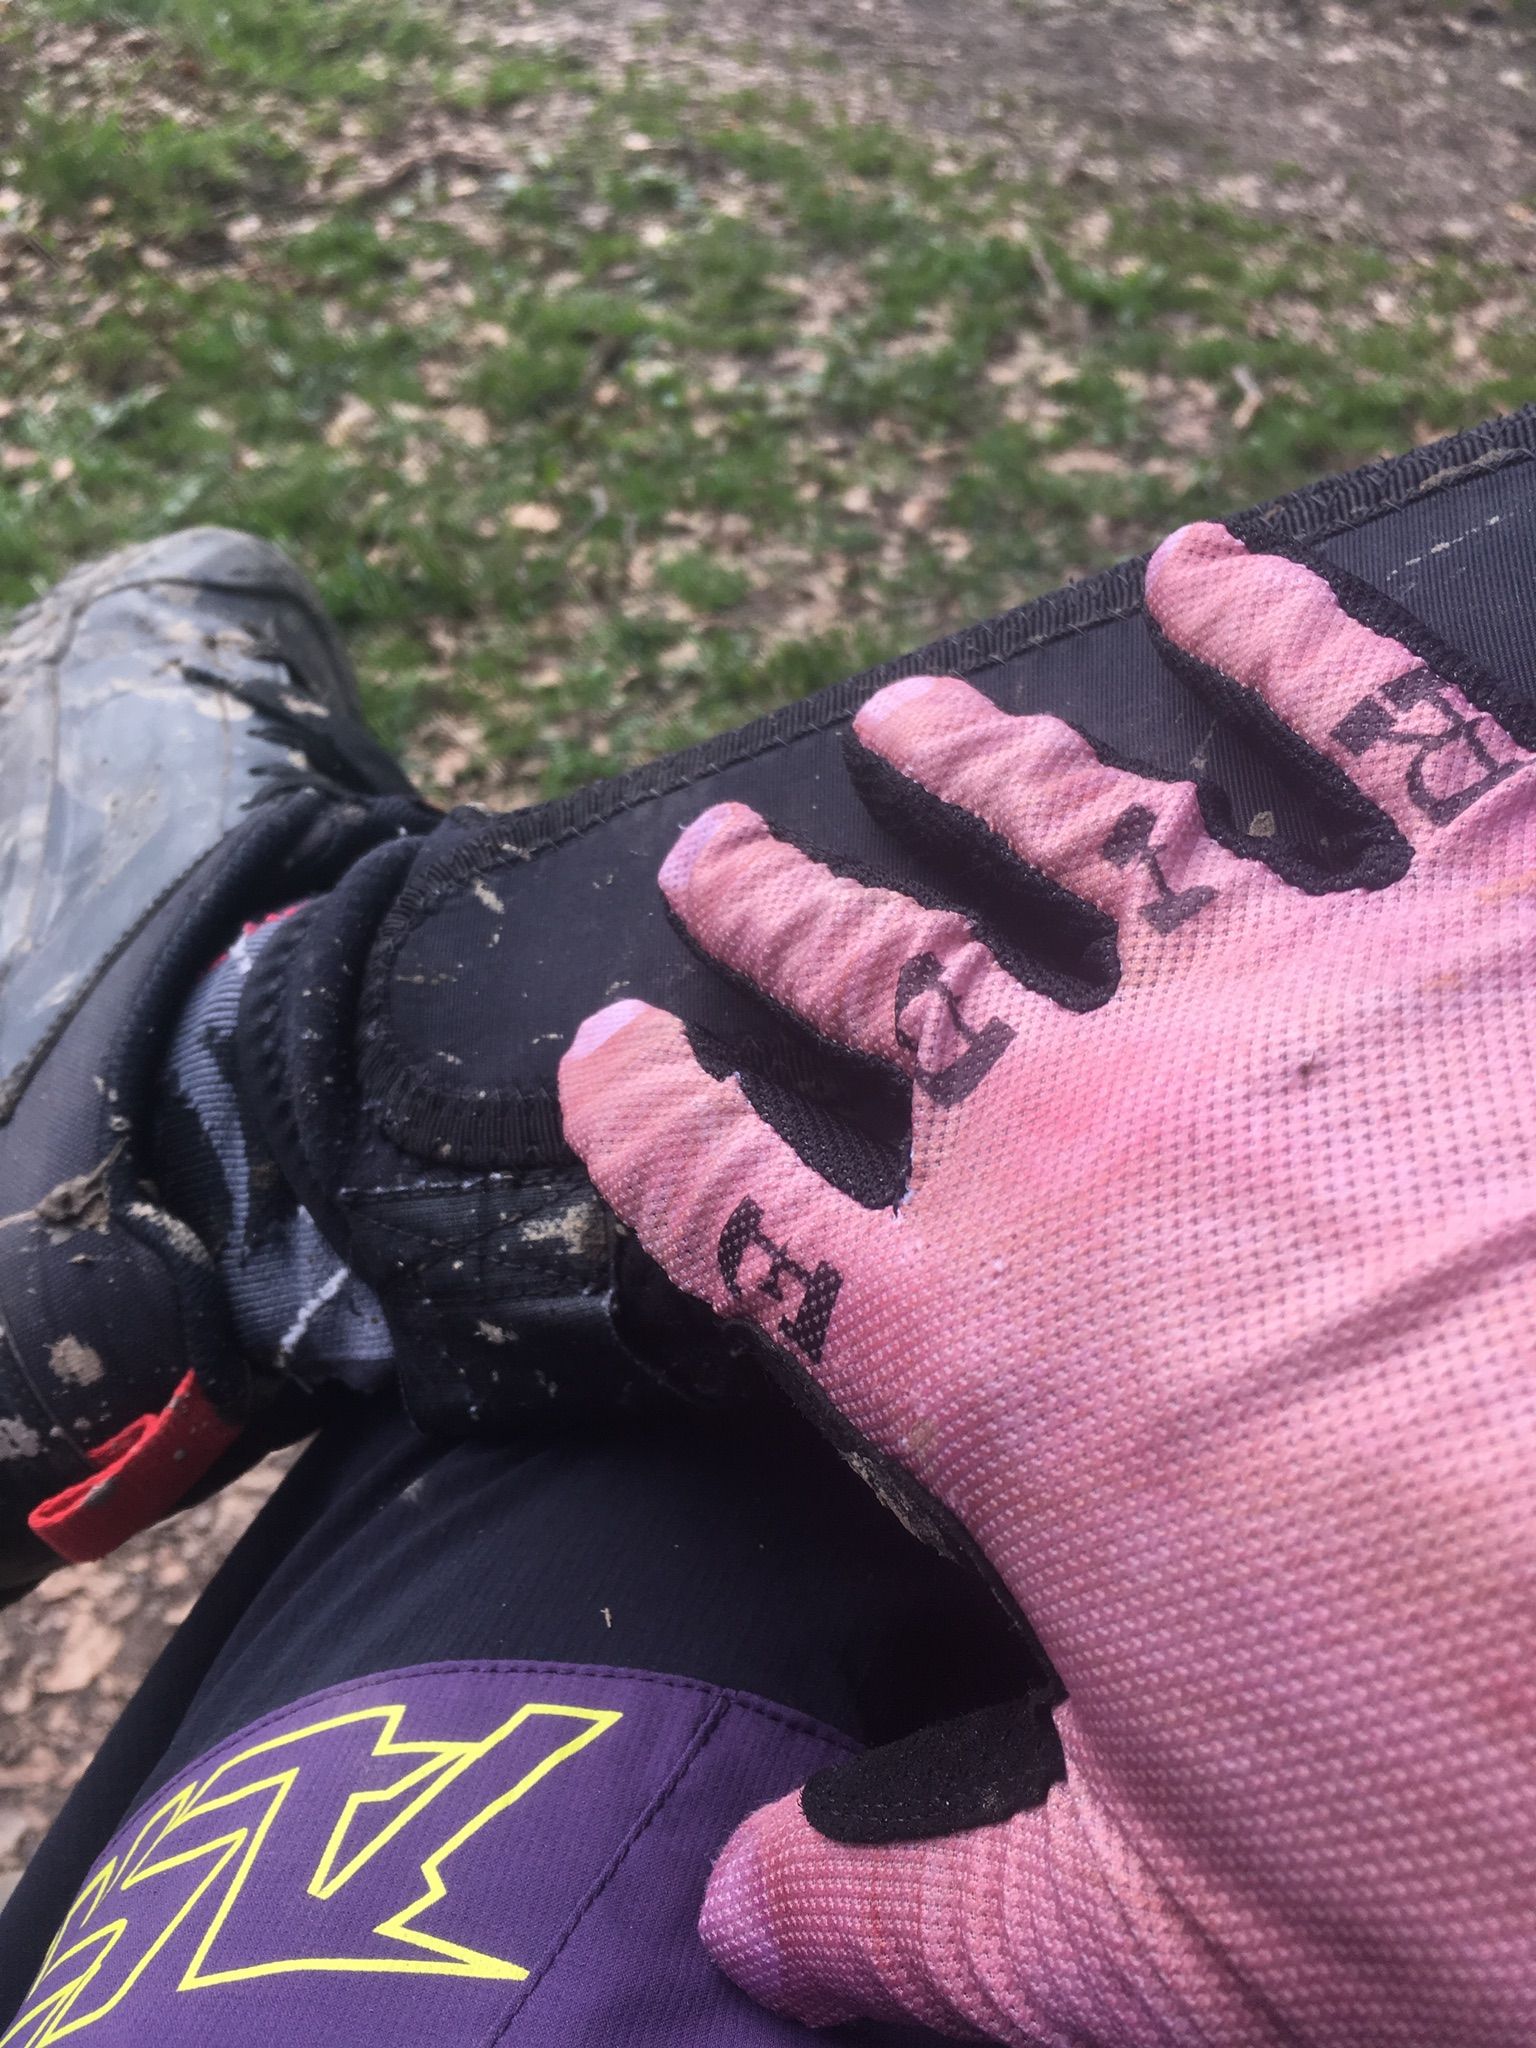 Dünne Handschuhe für den Sommer | MTB-News.de | IBC Mountainbike Forum